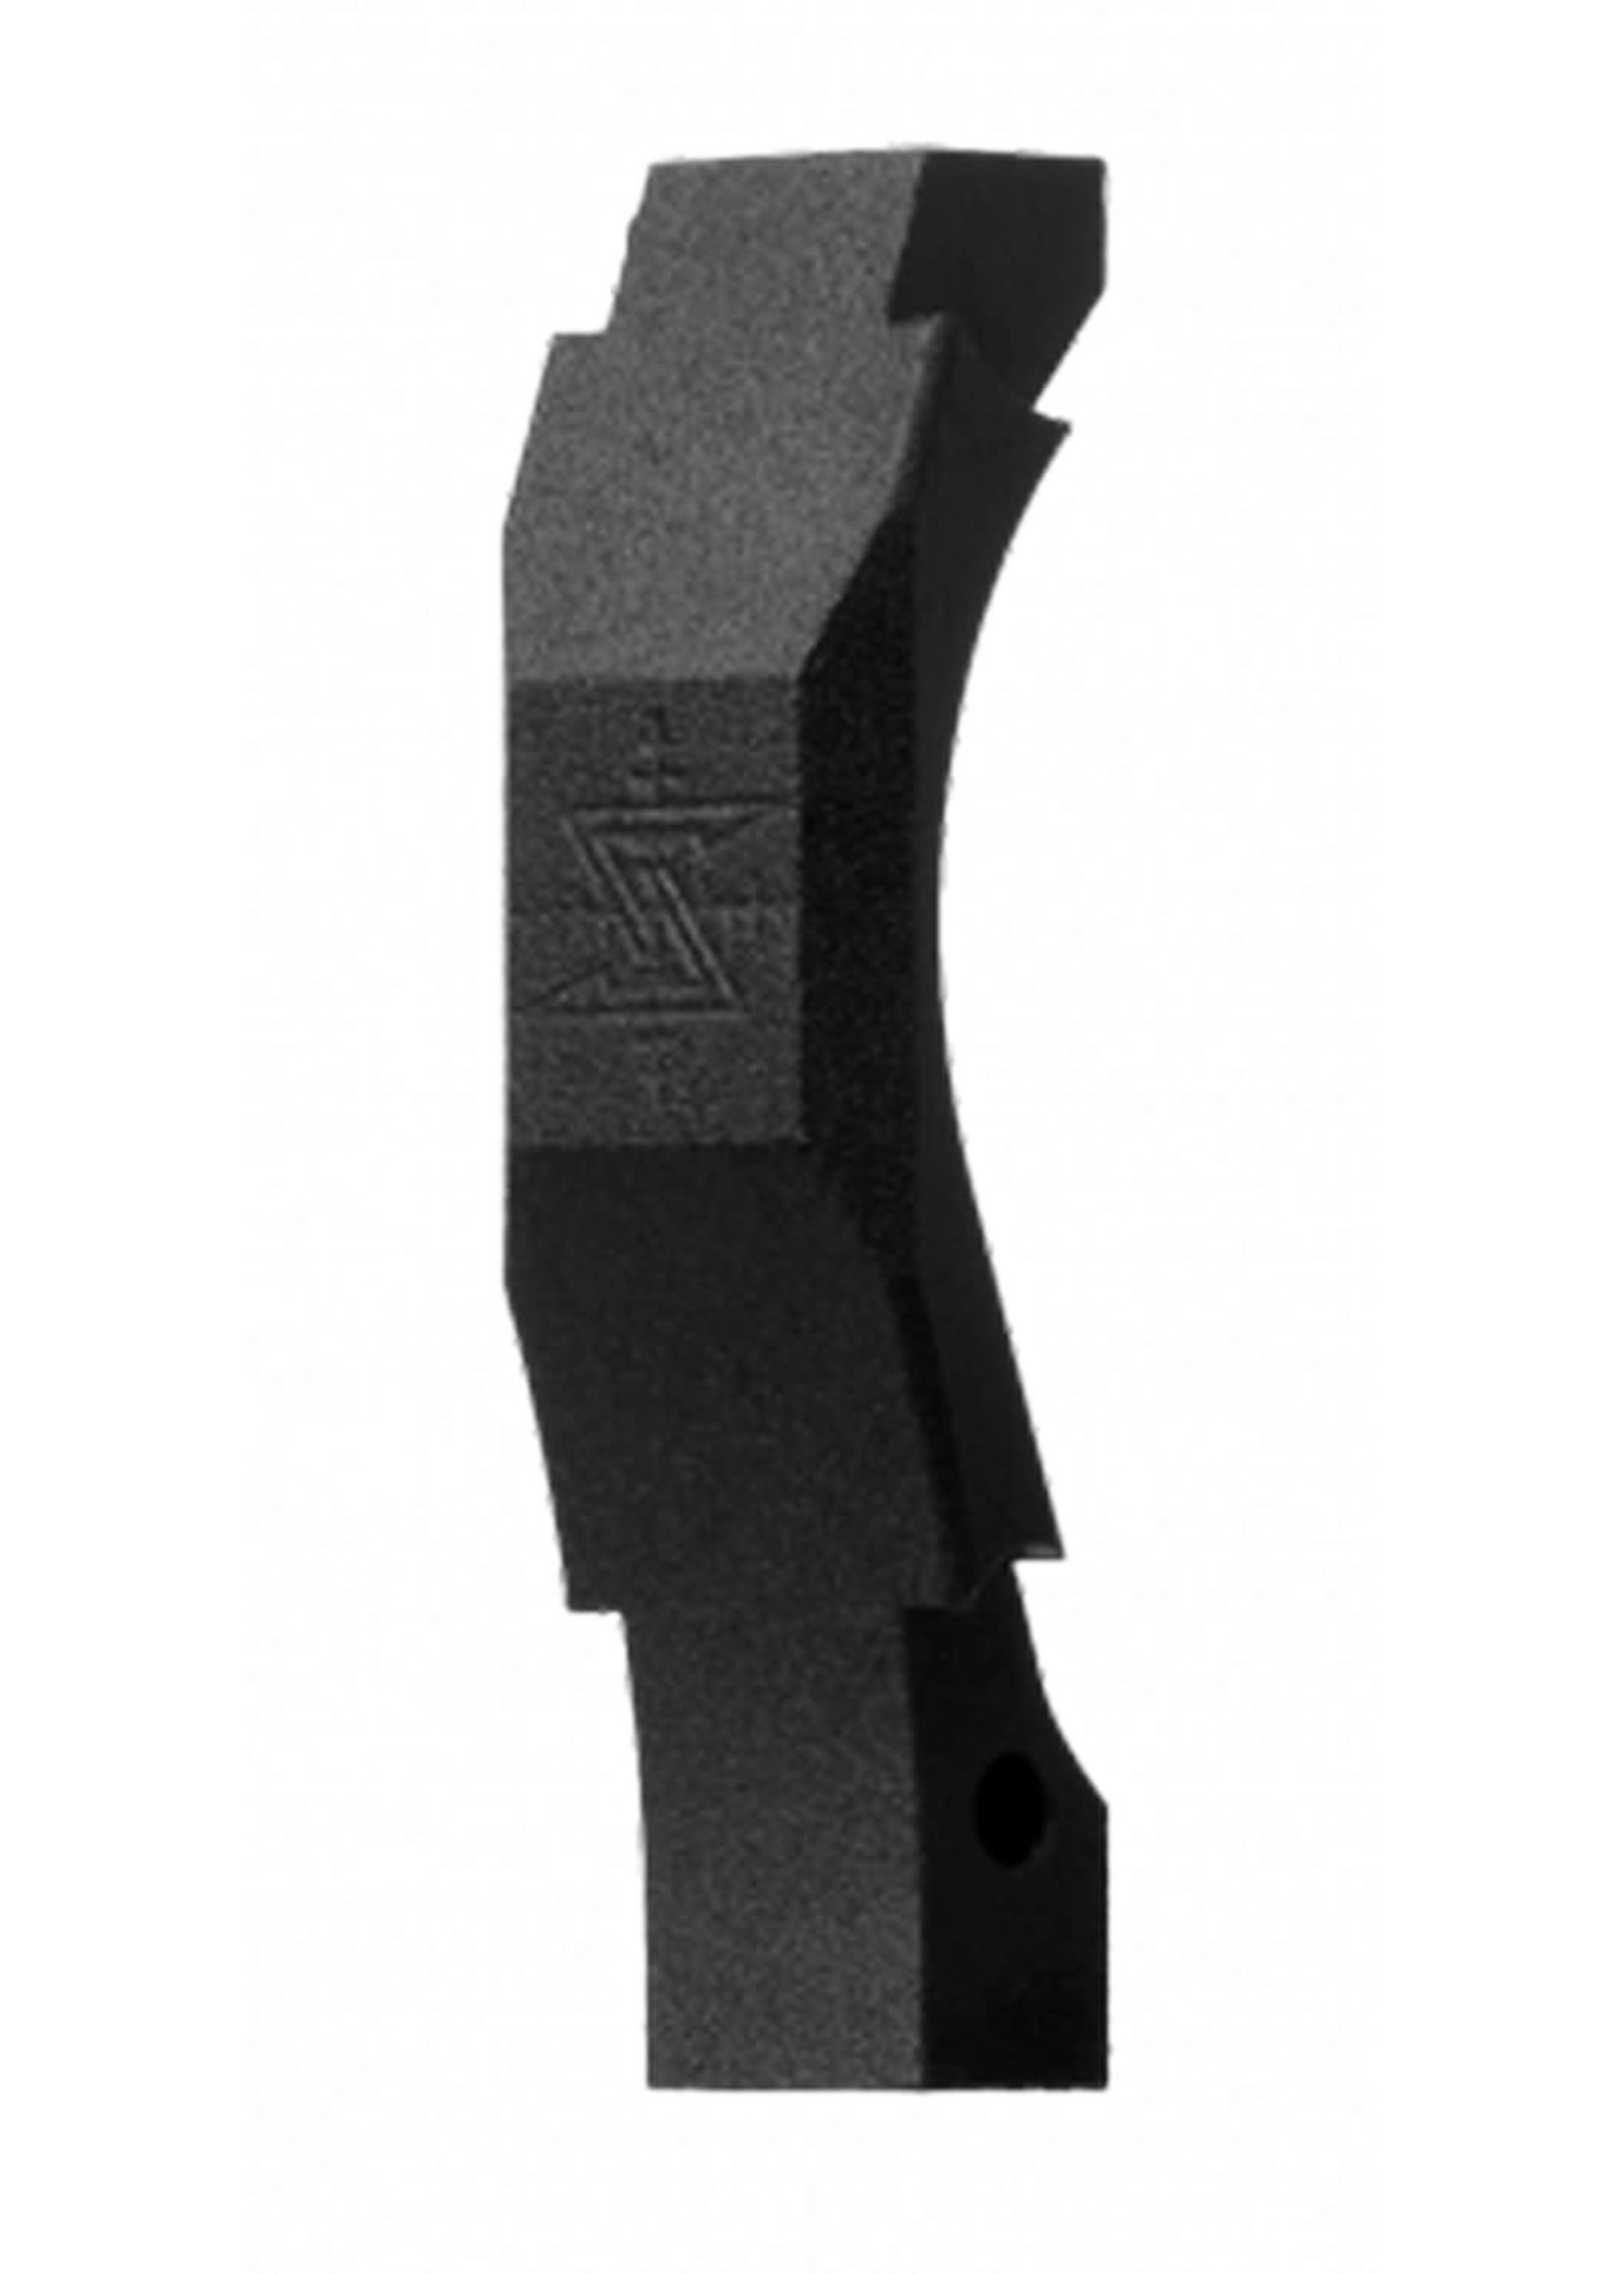 Seekins Precision Seekins Precision Billet Trigger Guard AR-Platform Black Anodized